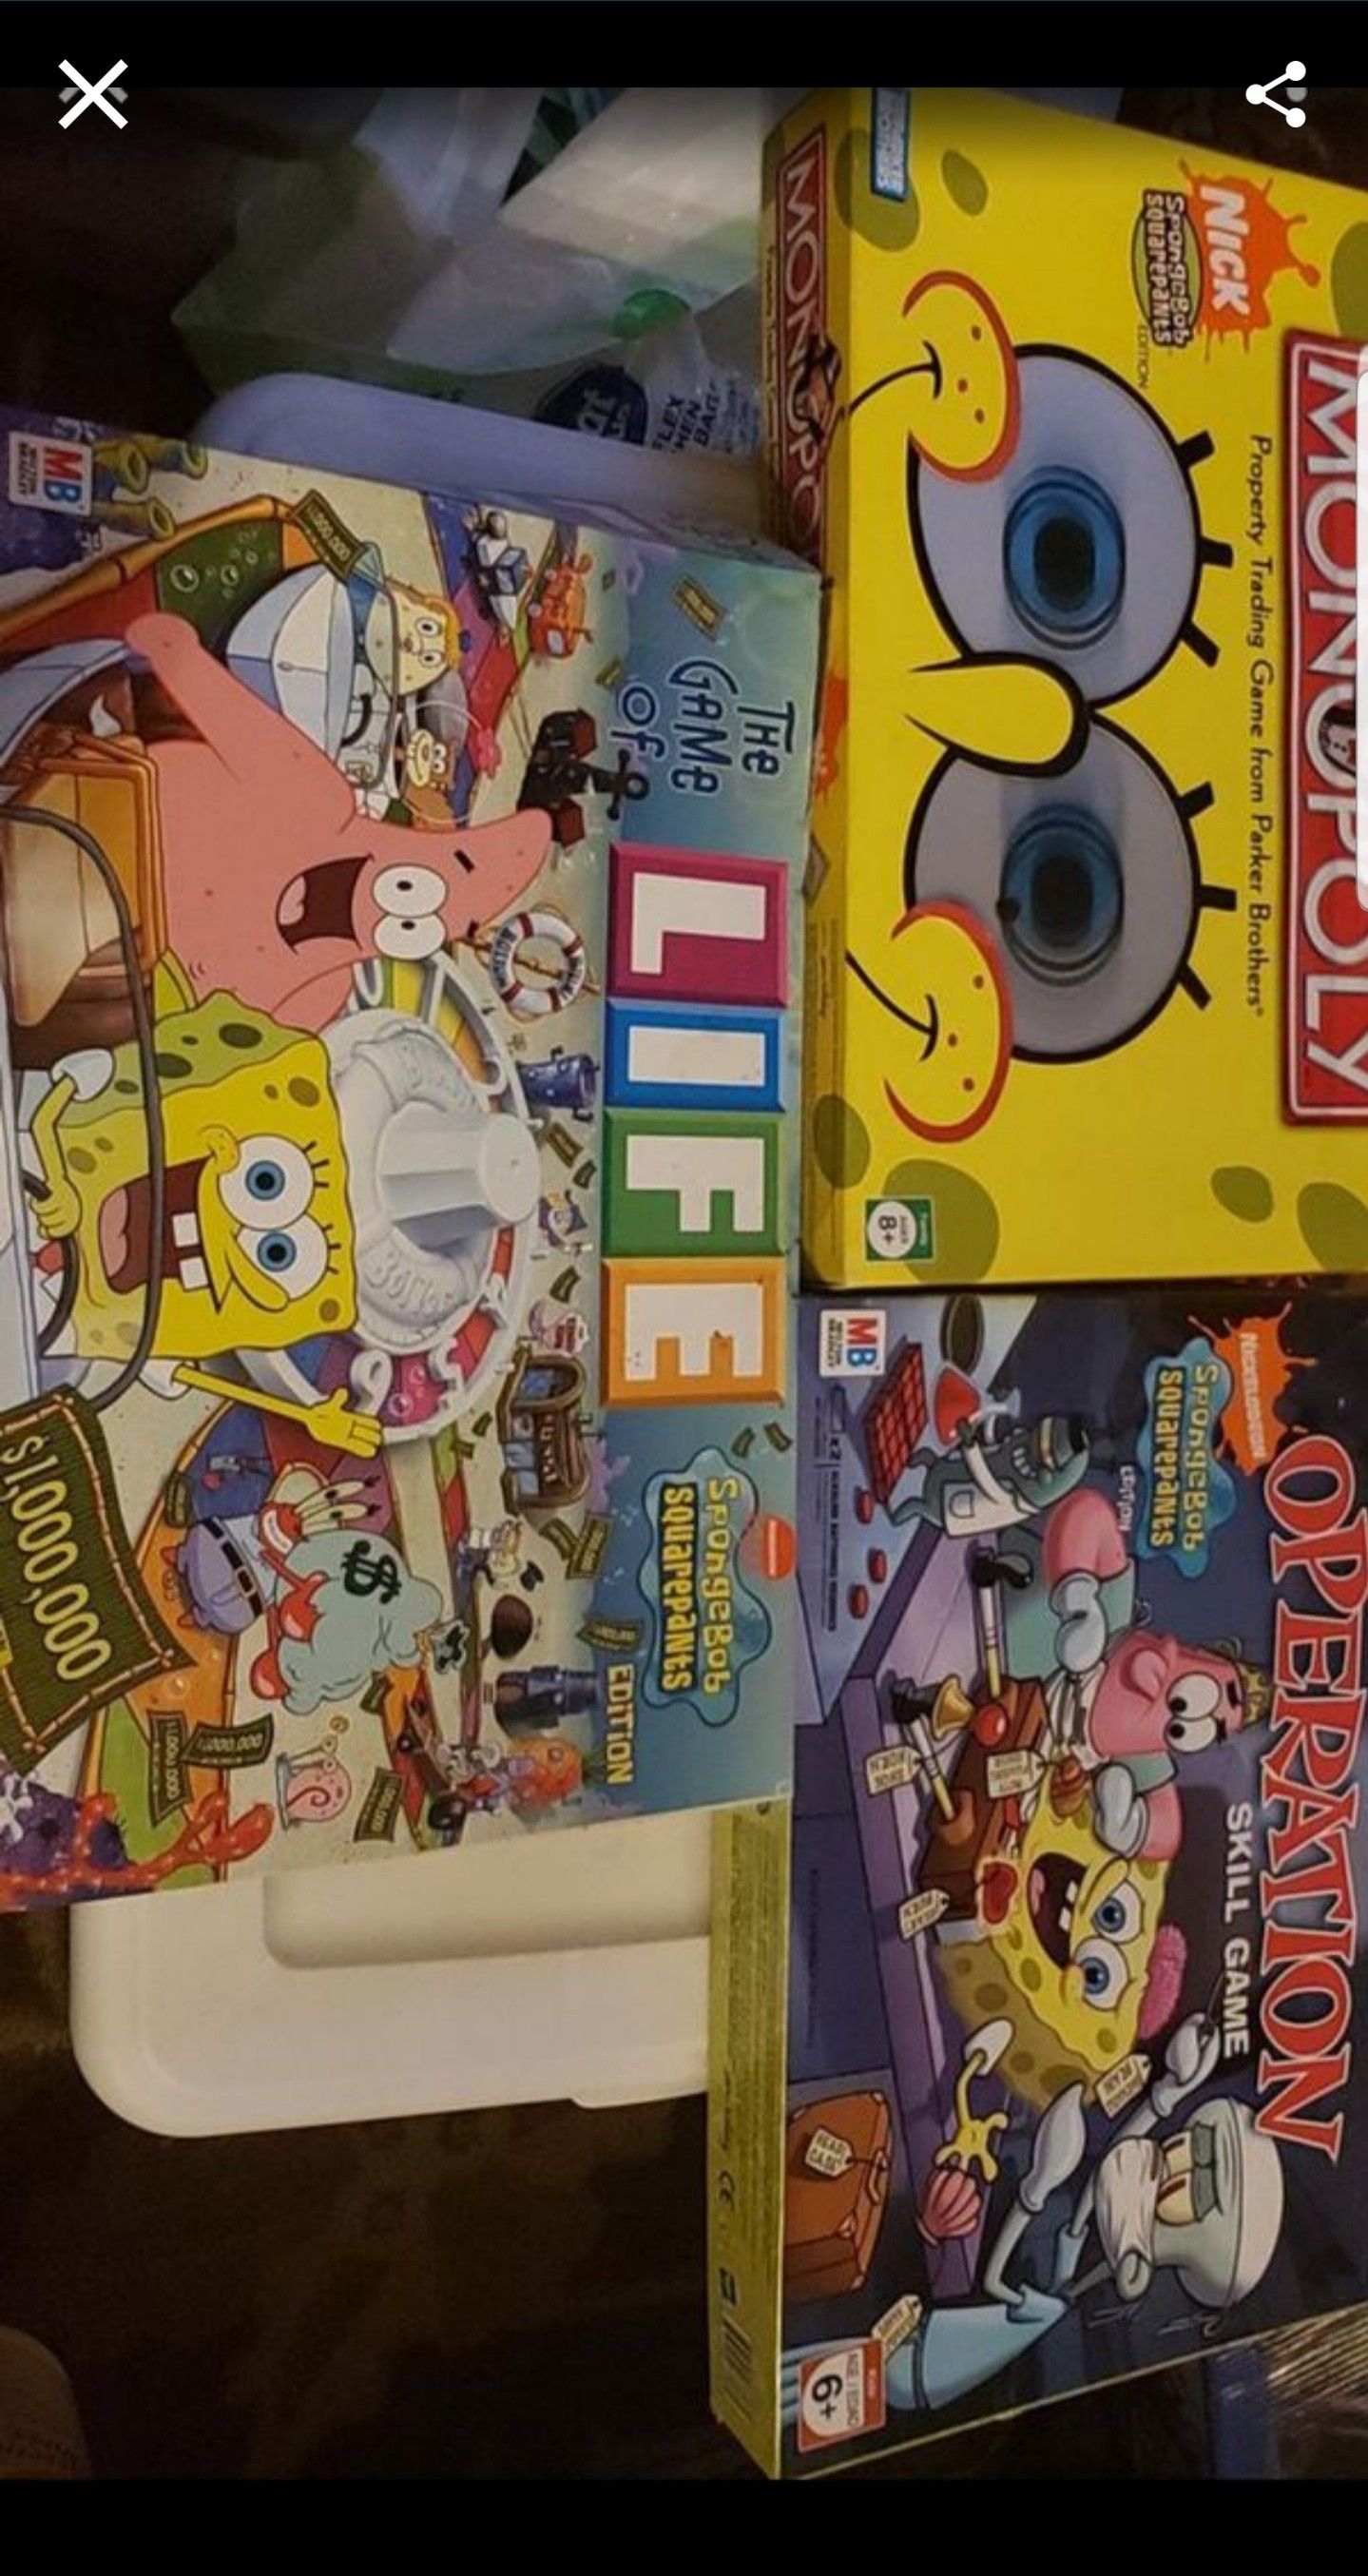 Operation/life/monopoly spongebob edition